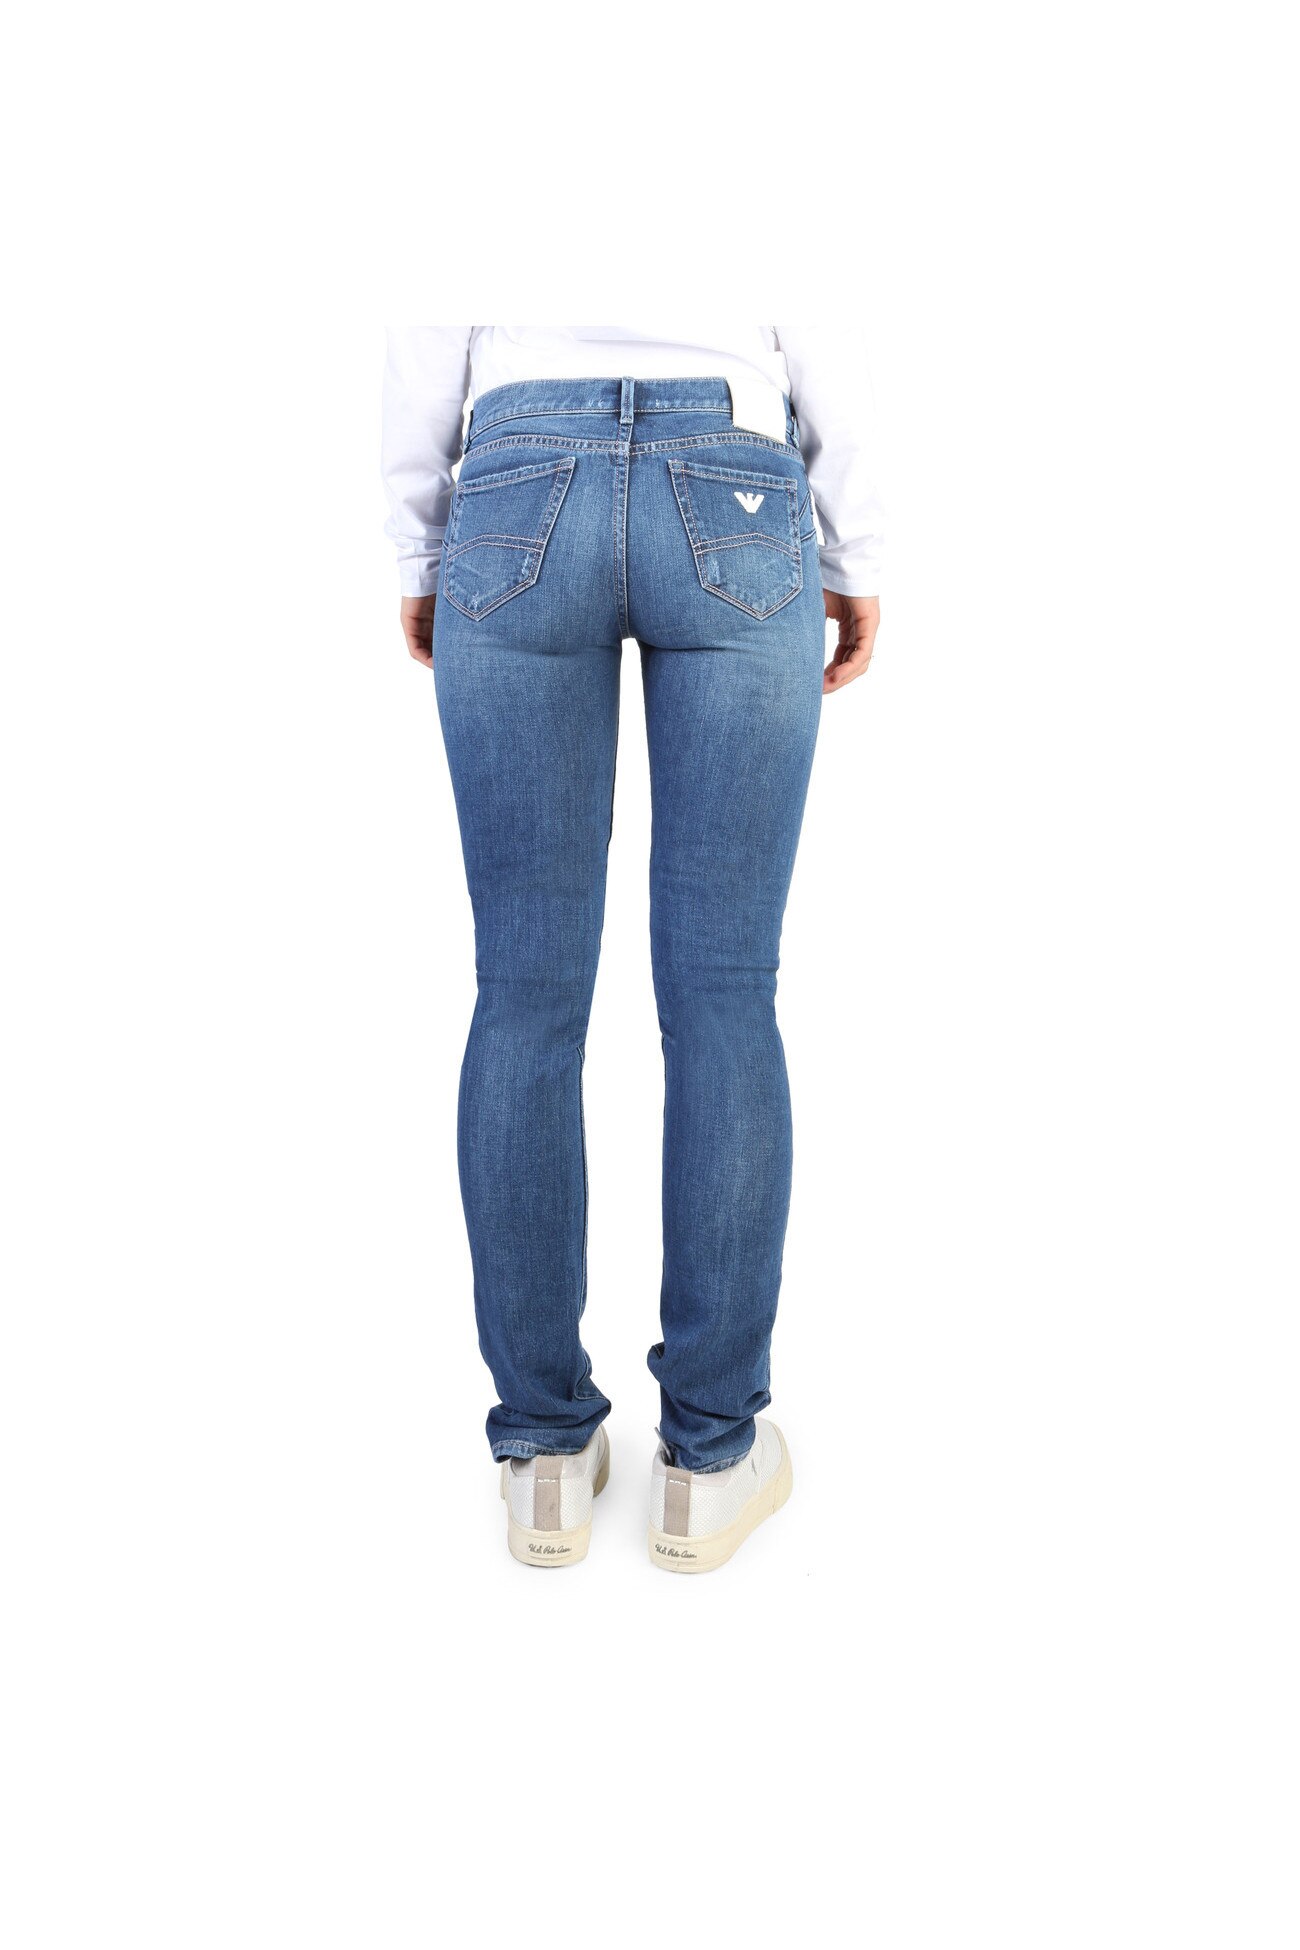 Hardness take journal Blugi femei Armani Jeans model C5J23_5E, Talie inalta, culoare Albastru,  marime 25 EU - eMAG.ro